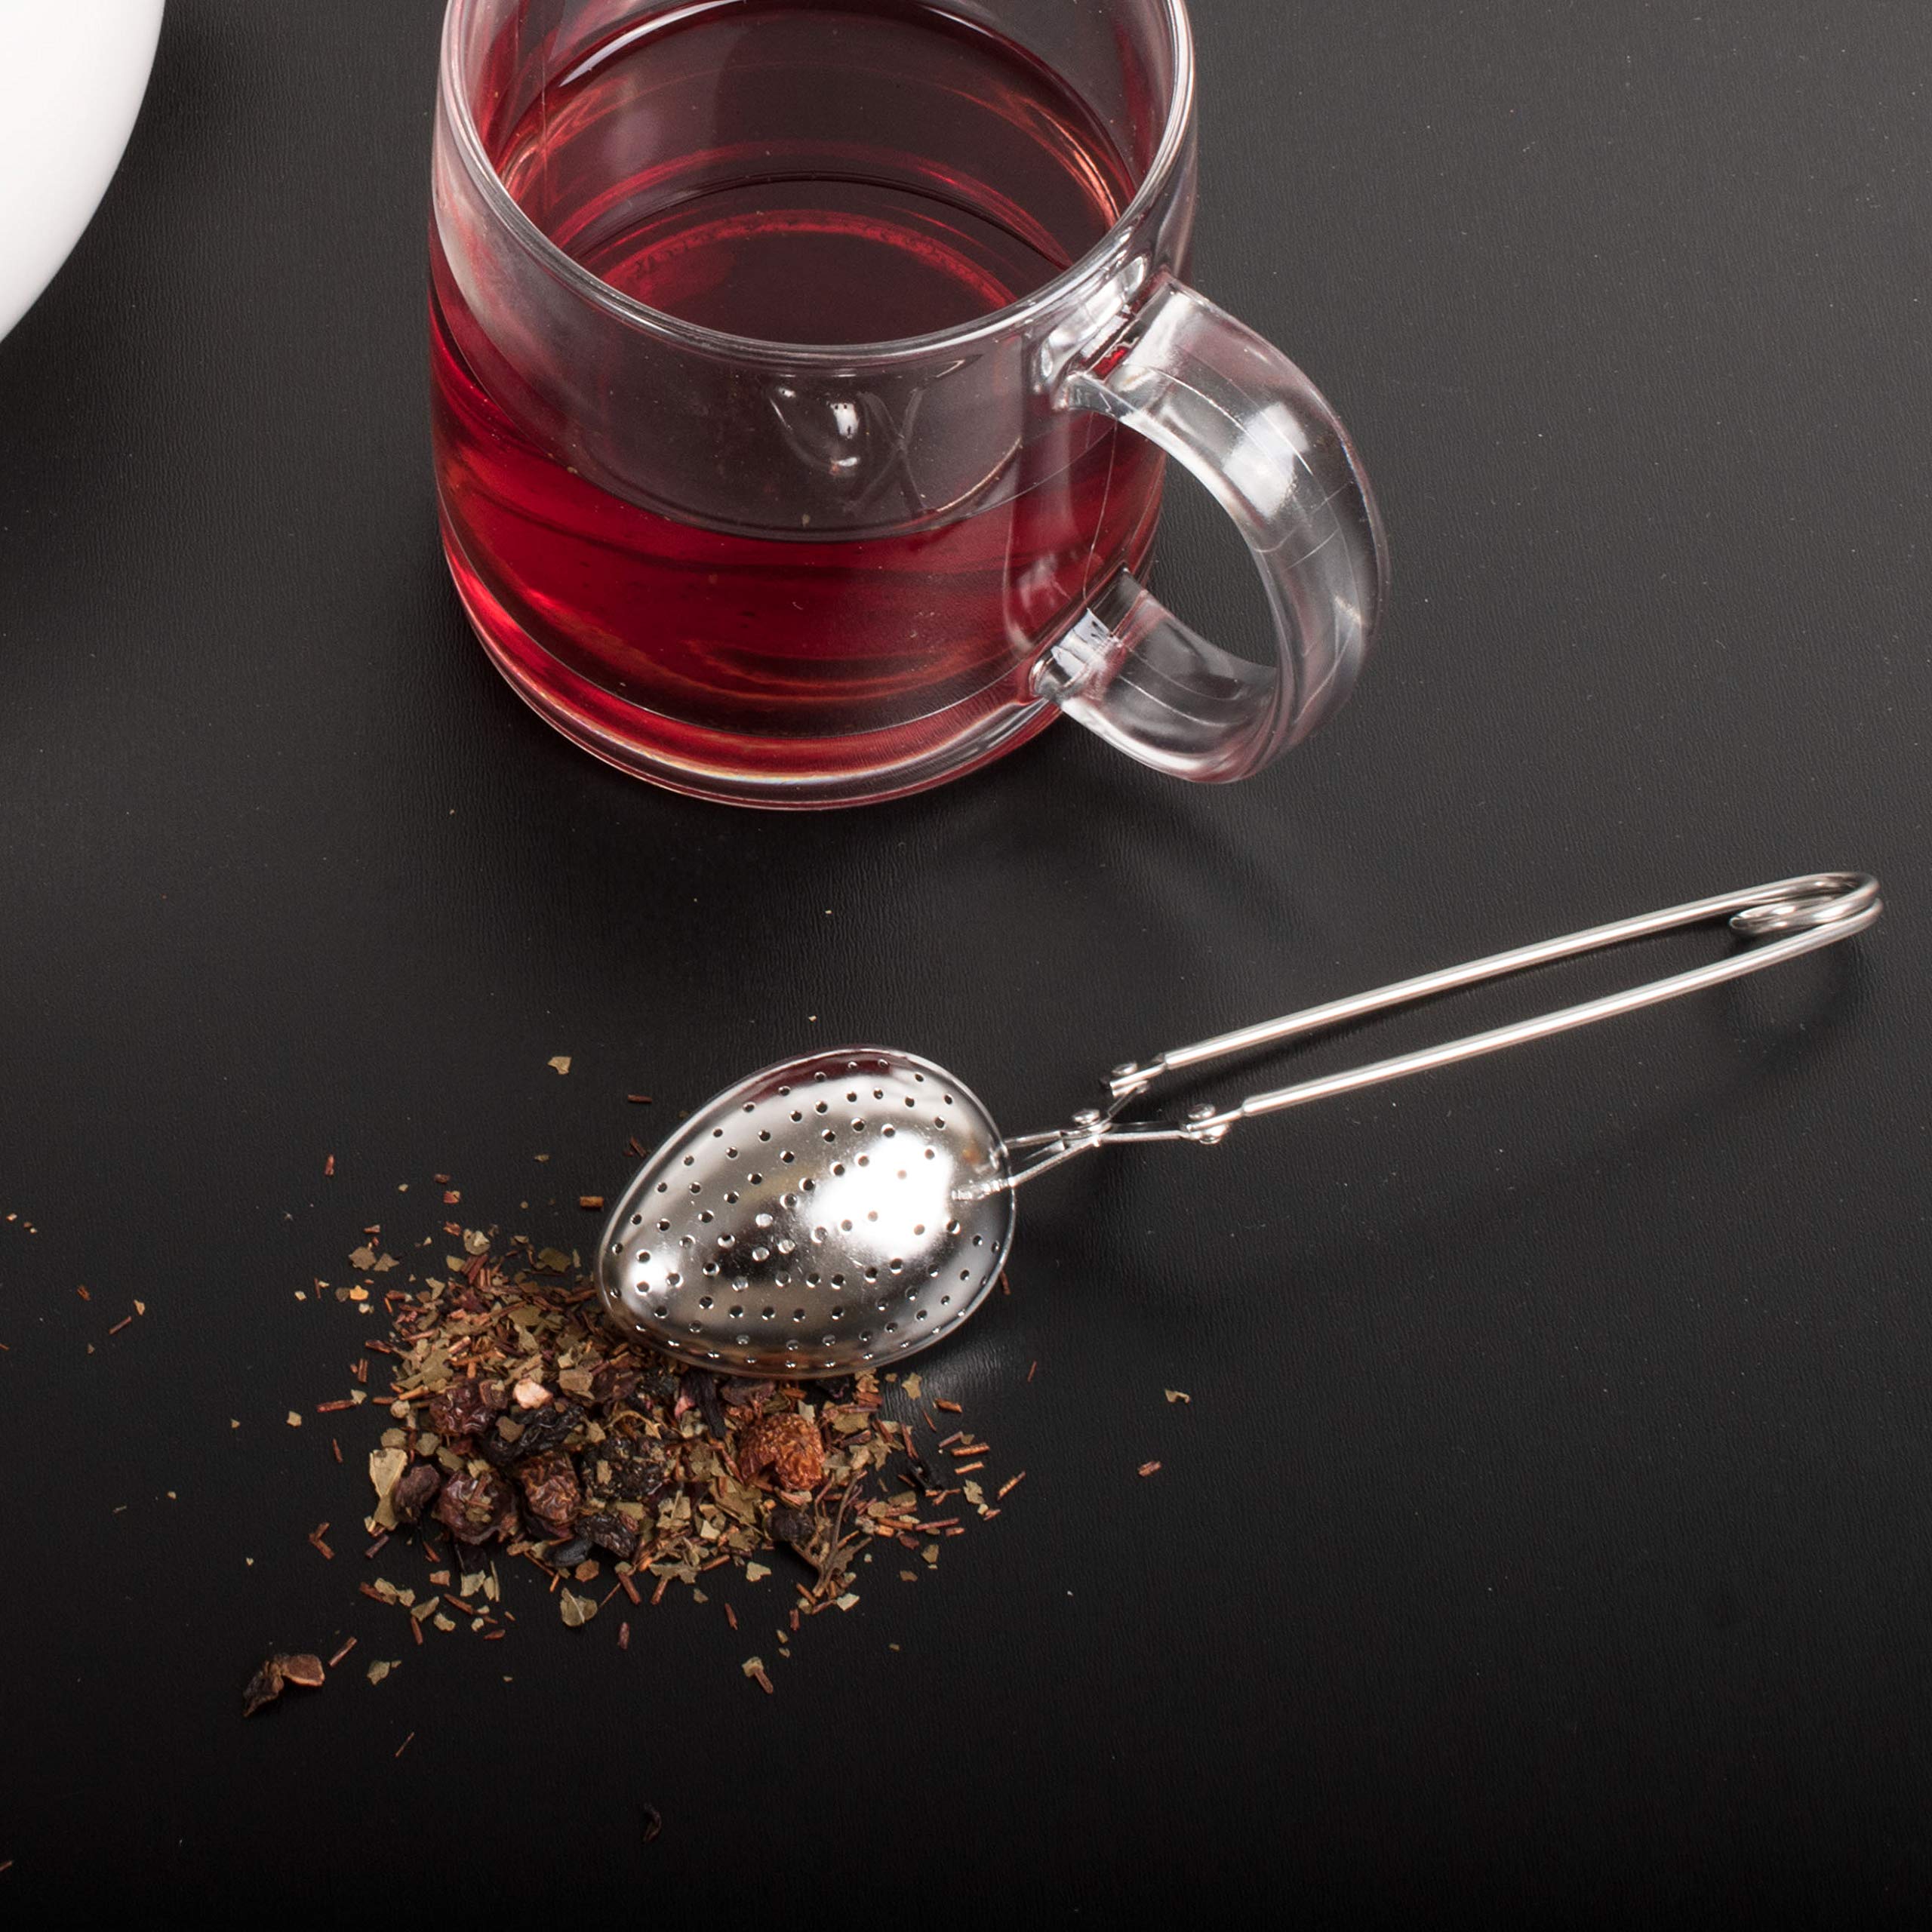 HIC Long Handle Loose Leaf Snap Tea Infuser Spoon, 18/8 Stainless Steel Mesh, 1.5-Inch